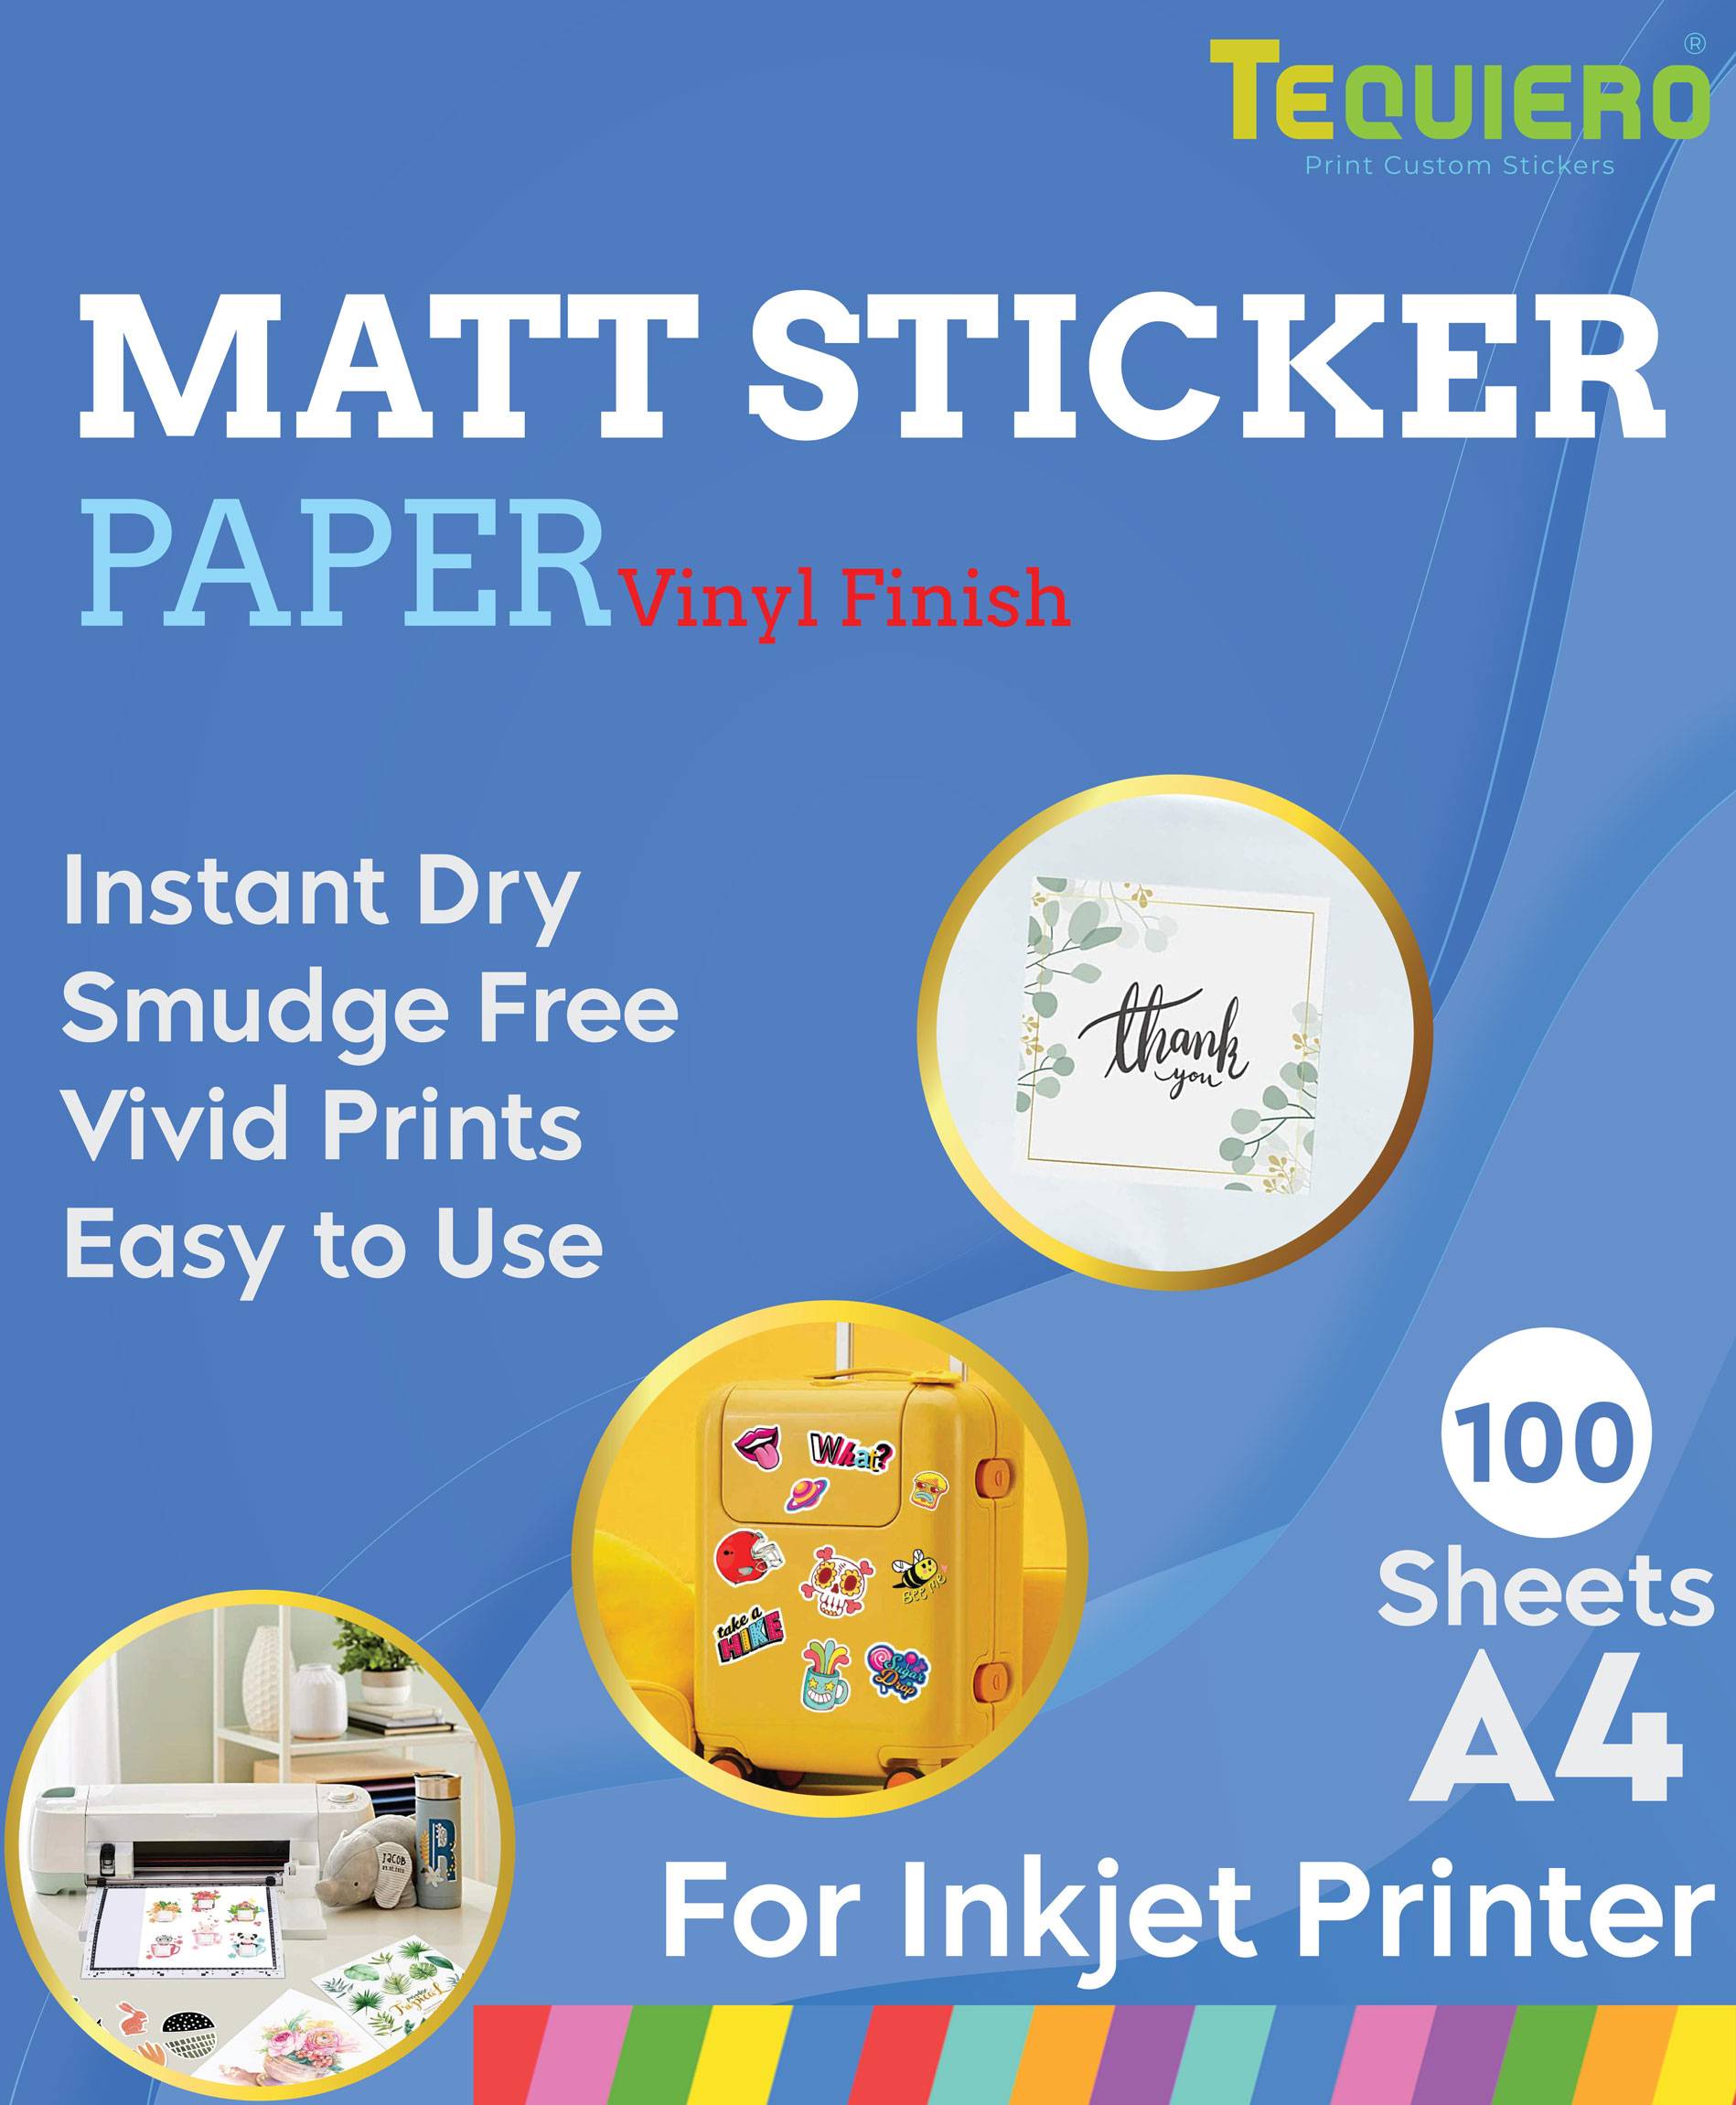 Matte Sticker Paper for Inkjet Printers